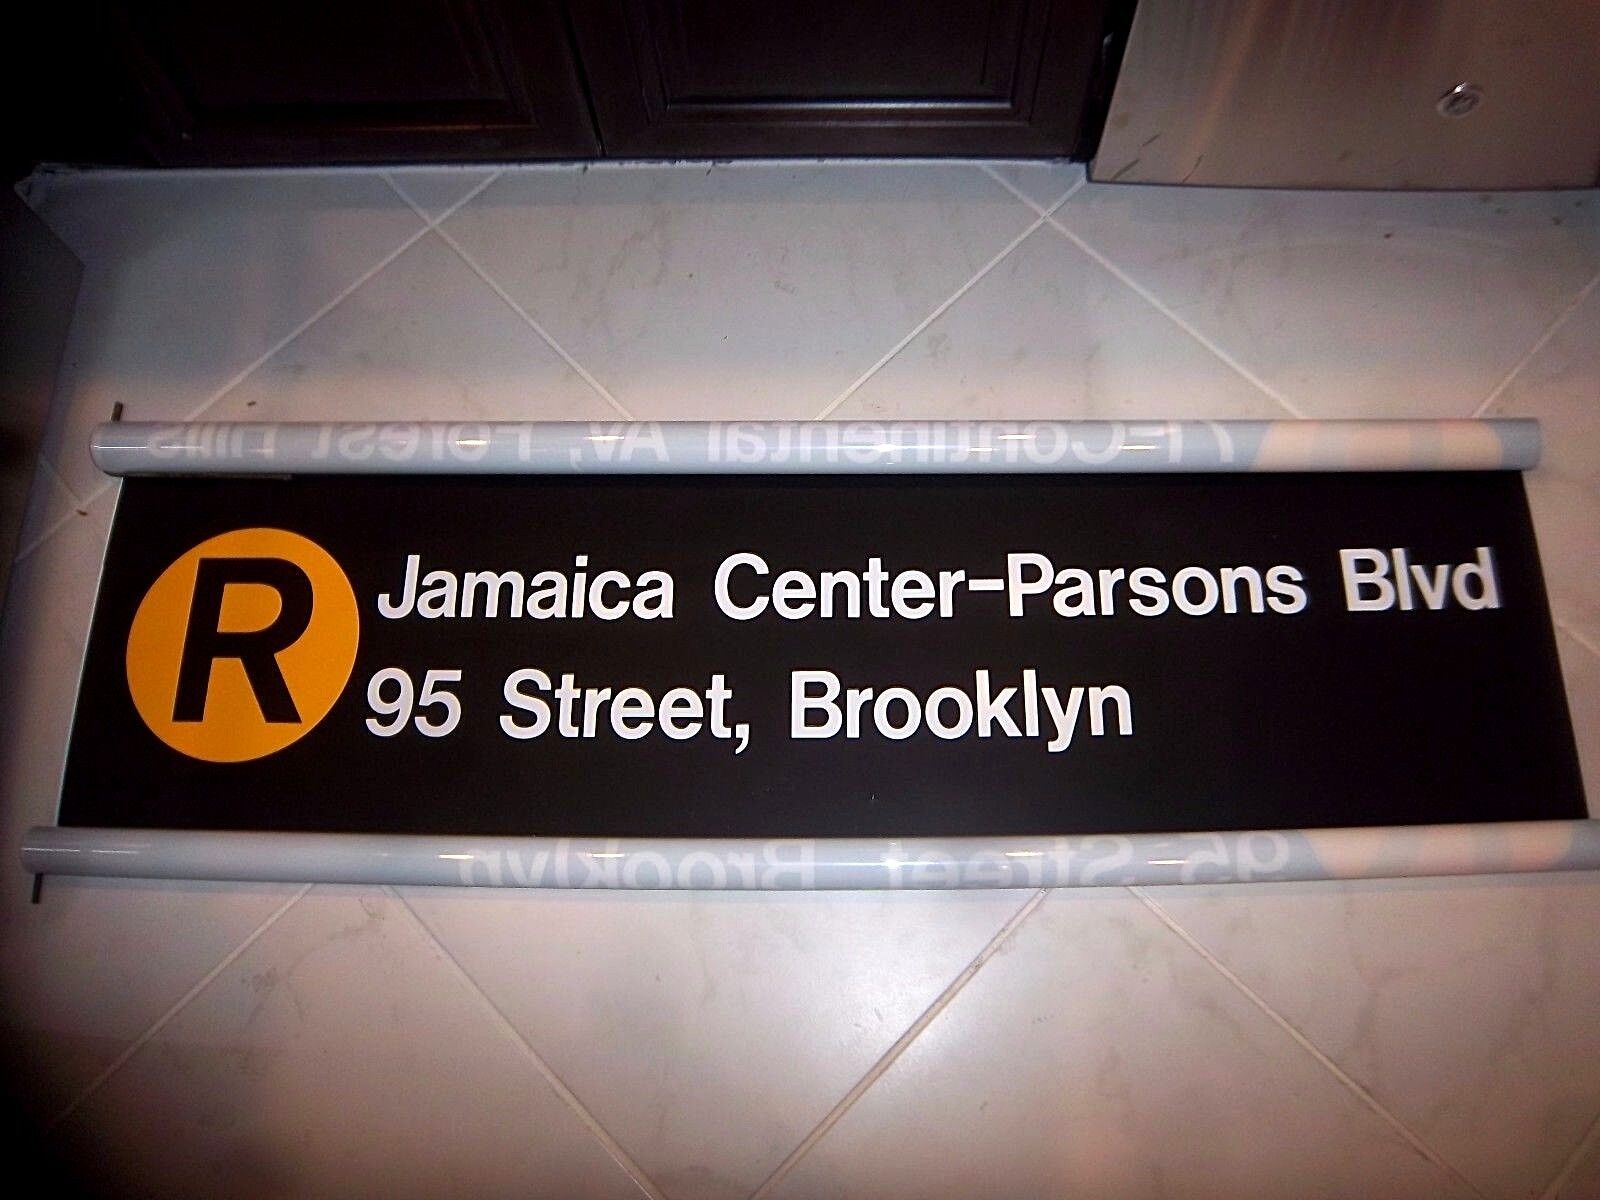 54X12 NY NYC SUBWAY ROLL SIGN R LINE R46 JAMAICA PARSONS BLVD 95th ST BROOKLYN